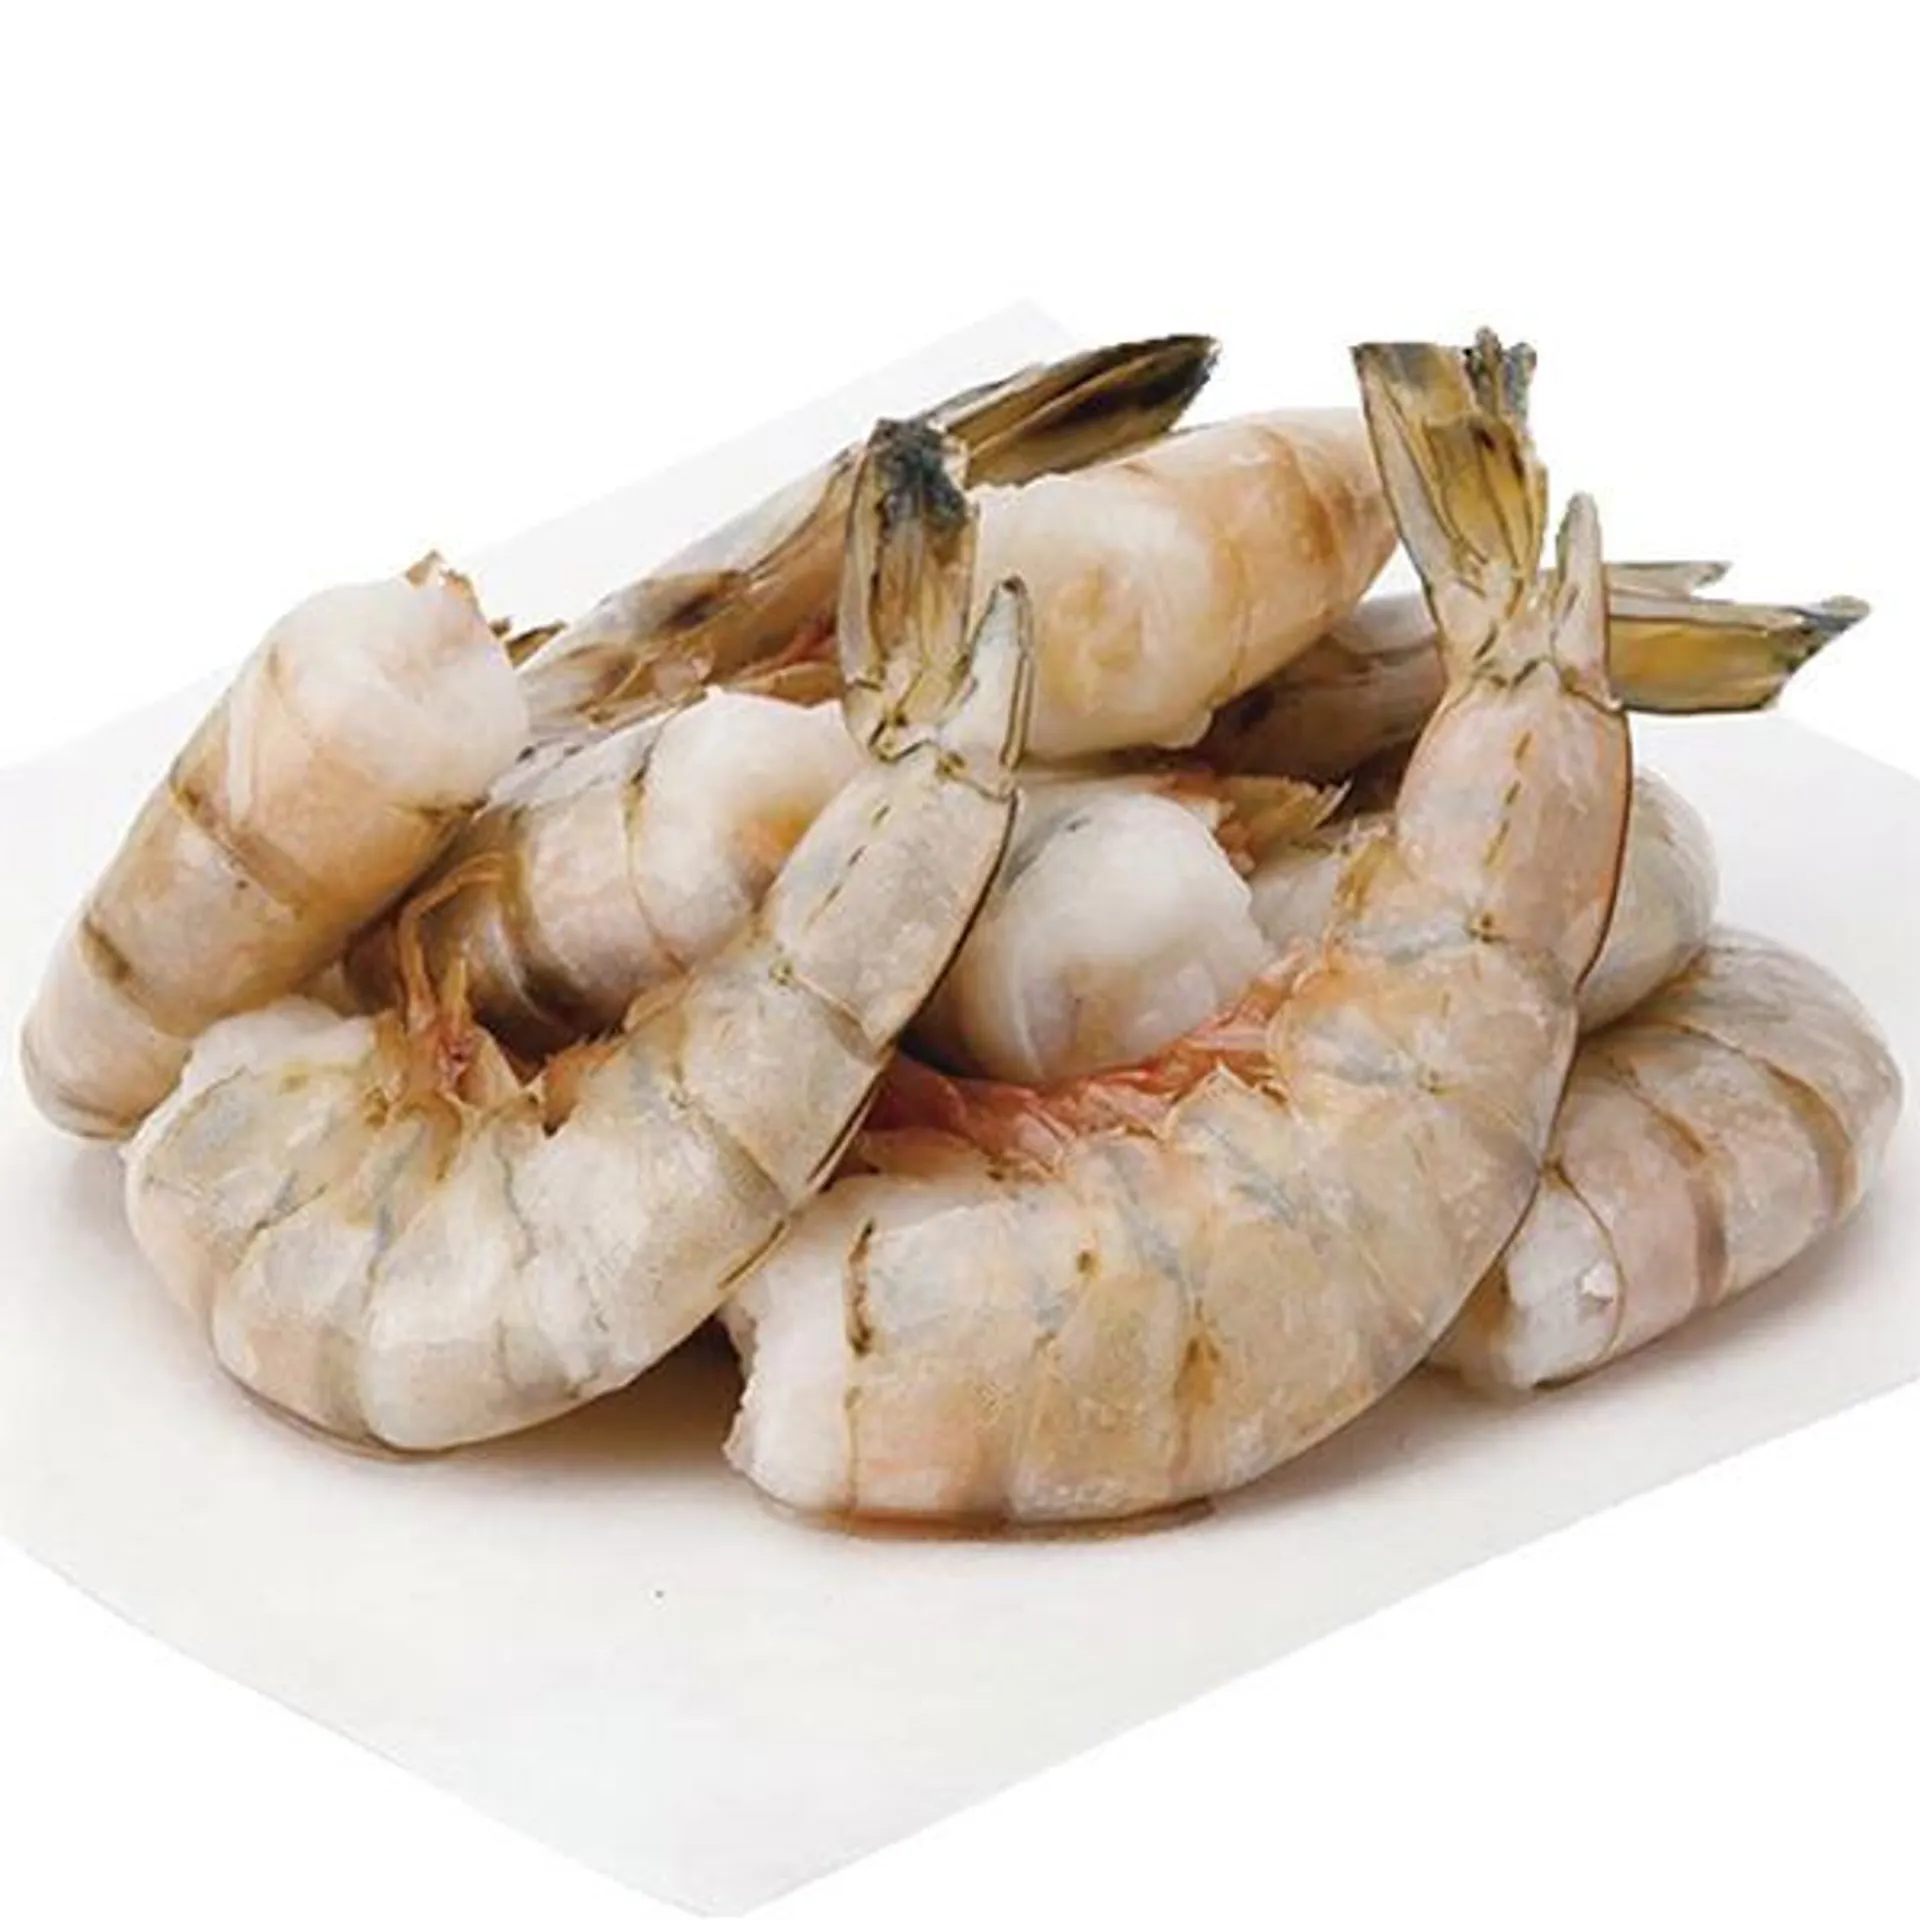 Free From 16/20 Raw Ez Peel Shrimp - 1 Pound